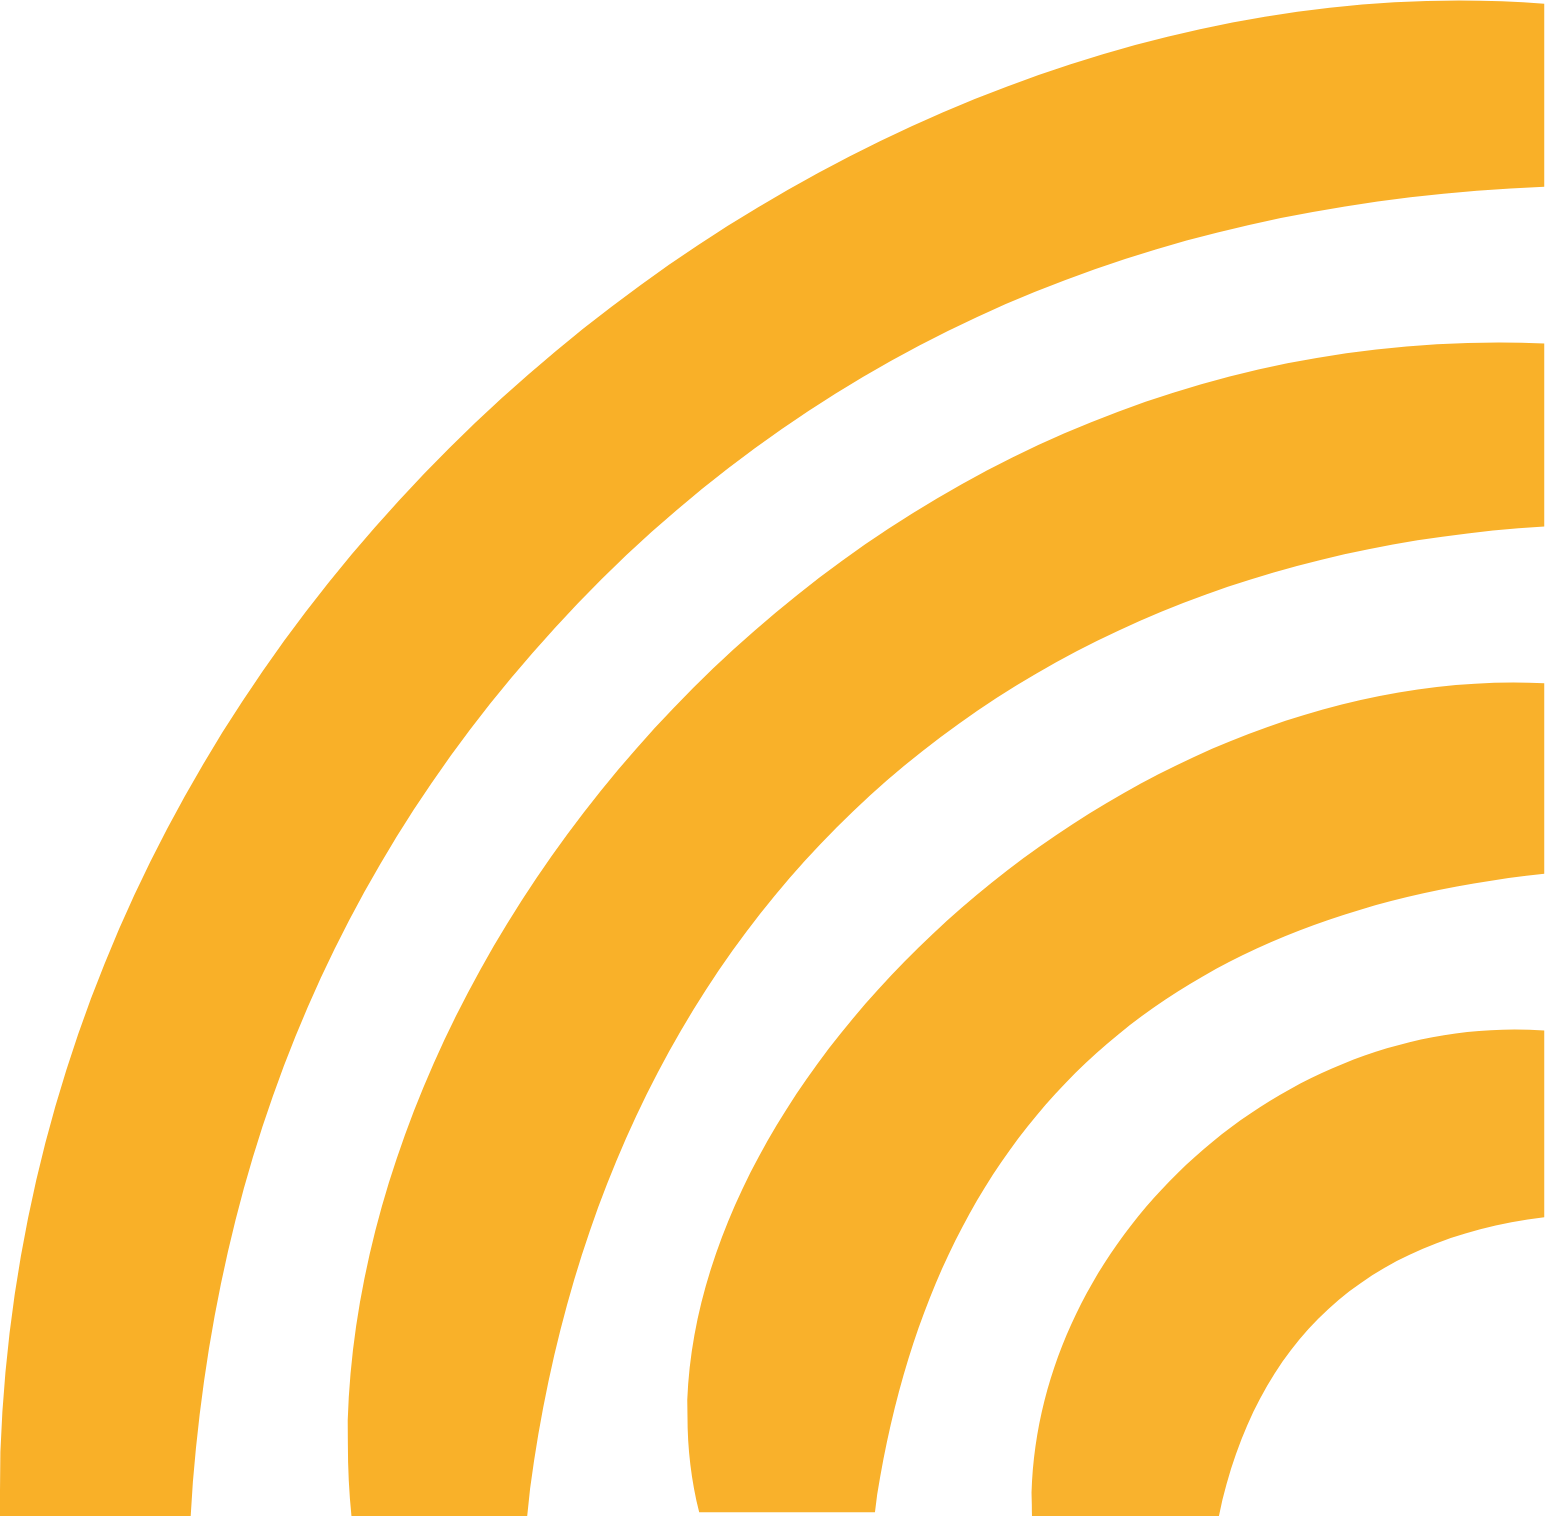 CAMGSM Plc. (Cellcard) logo (PNG transparent)